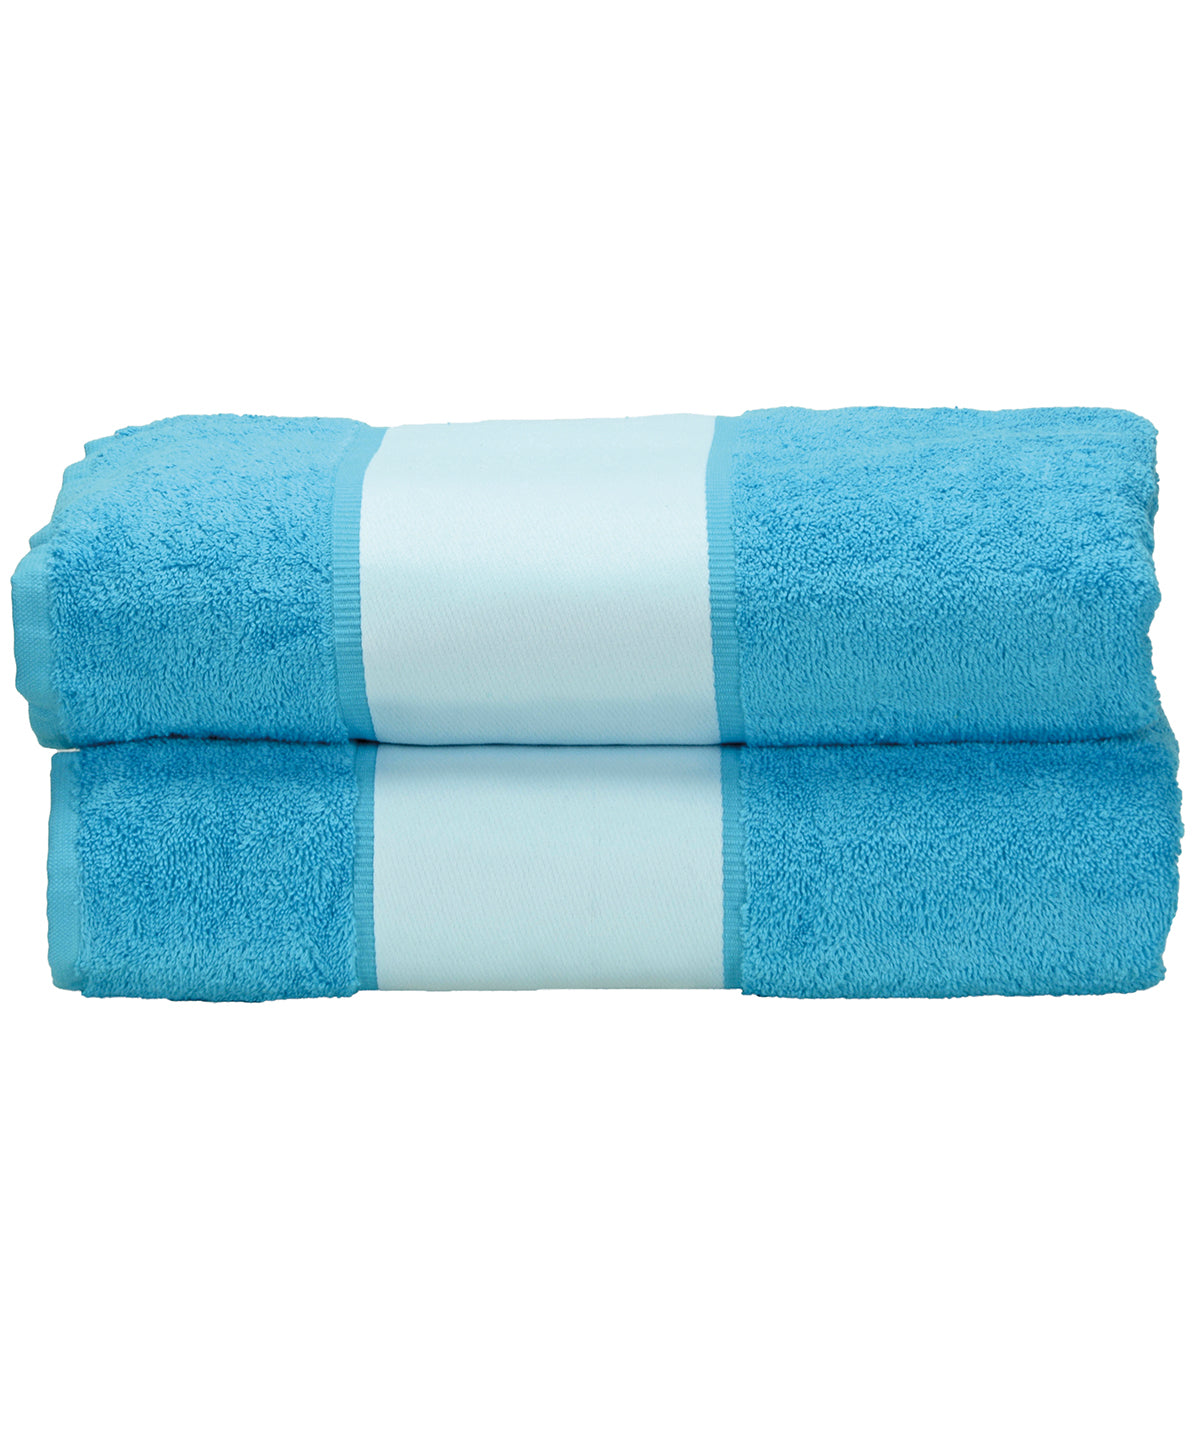 Personalised Towels - Turquoise A&R Towels ARTG® SUBLI-Me® bath towel